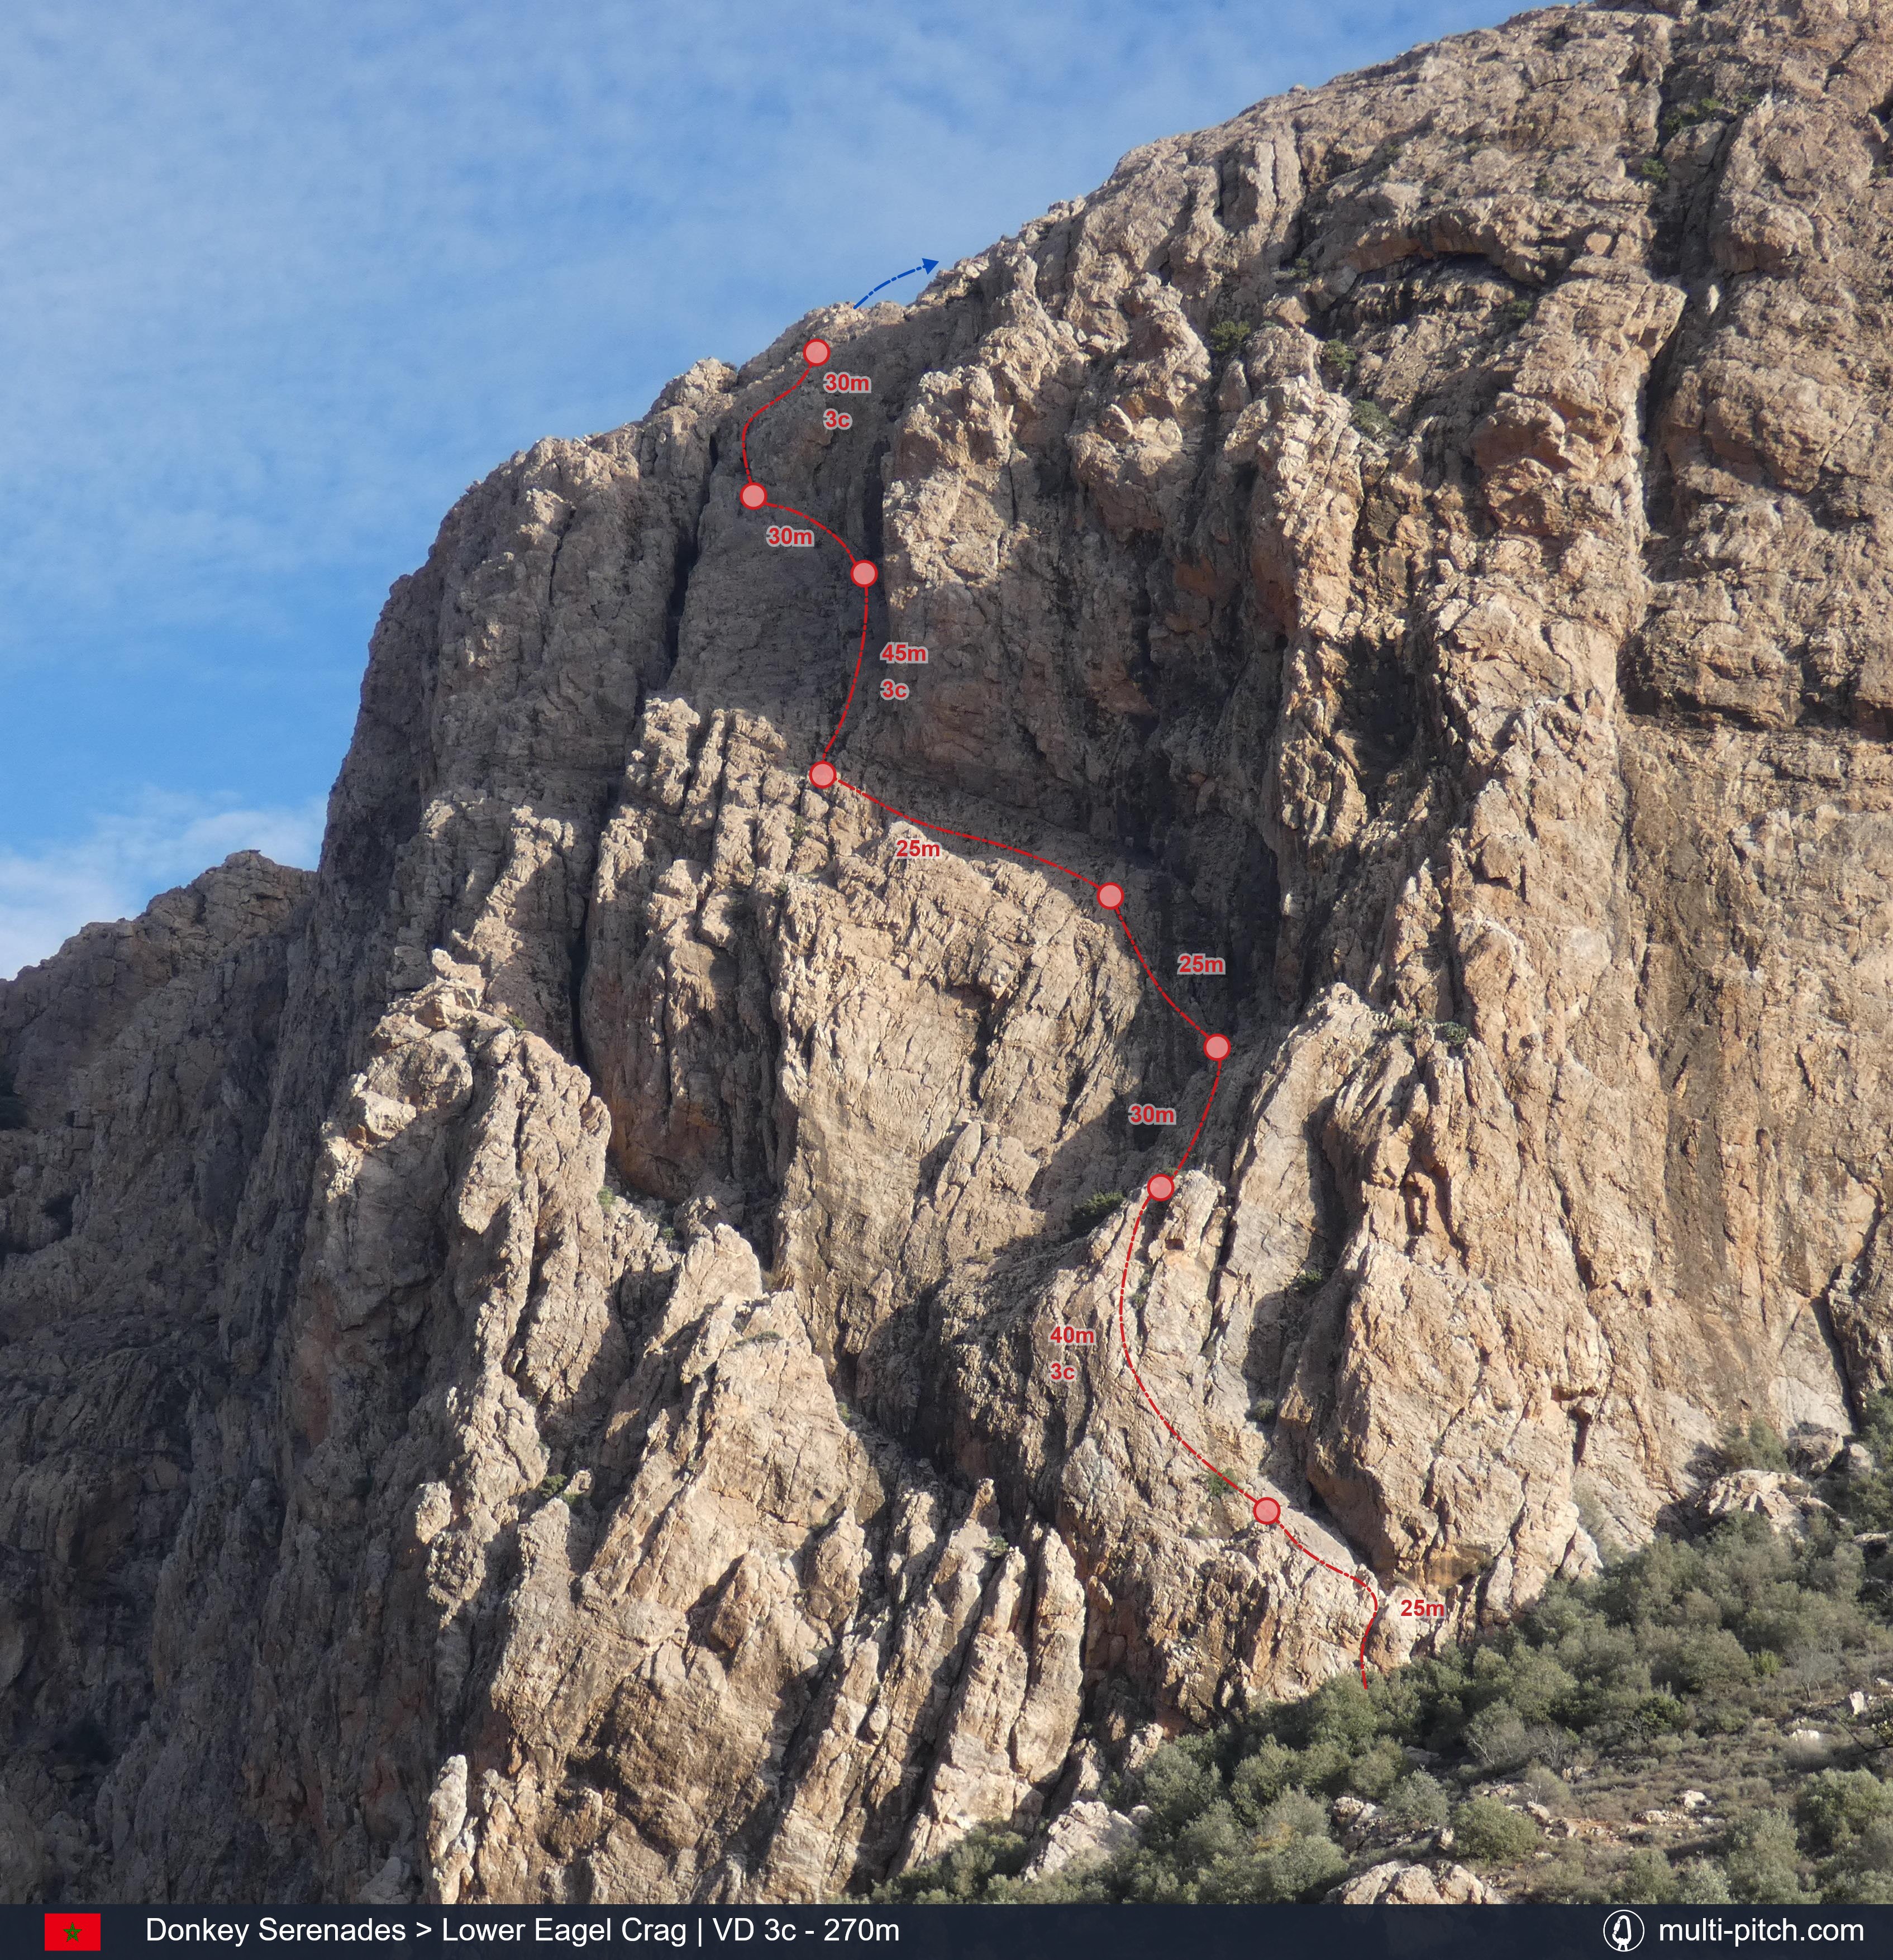 Donkey Serenades climb on Lower Eagle Crag